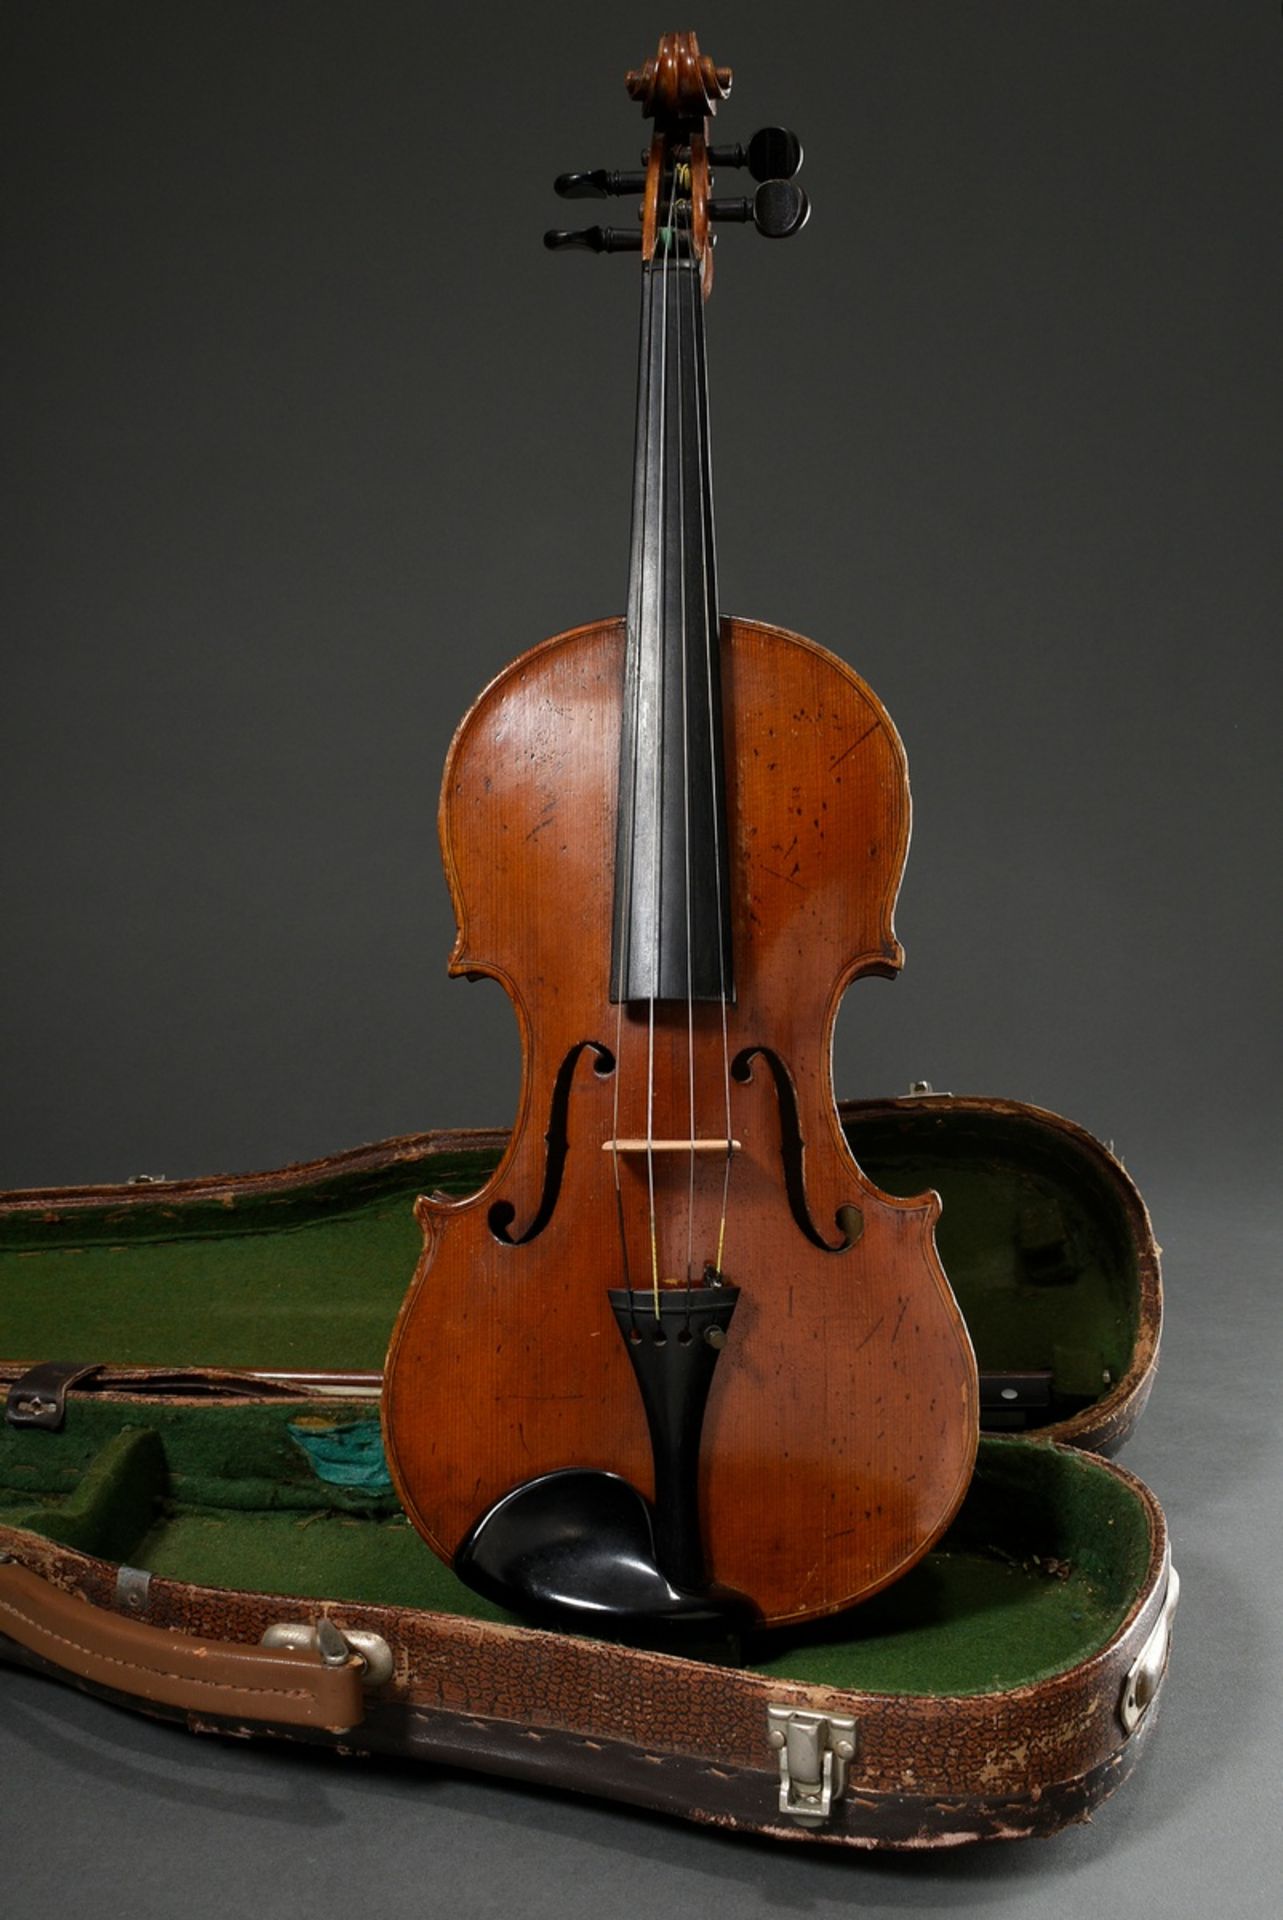 German manufacture violin, facsimile label inside "Josef Klotz in Mittenwalde anno 1795", Saxony 1s